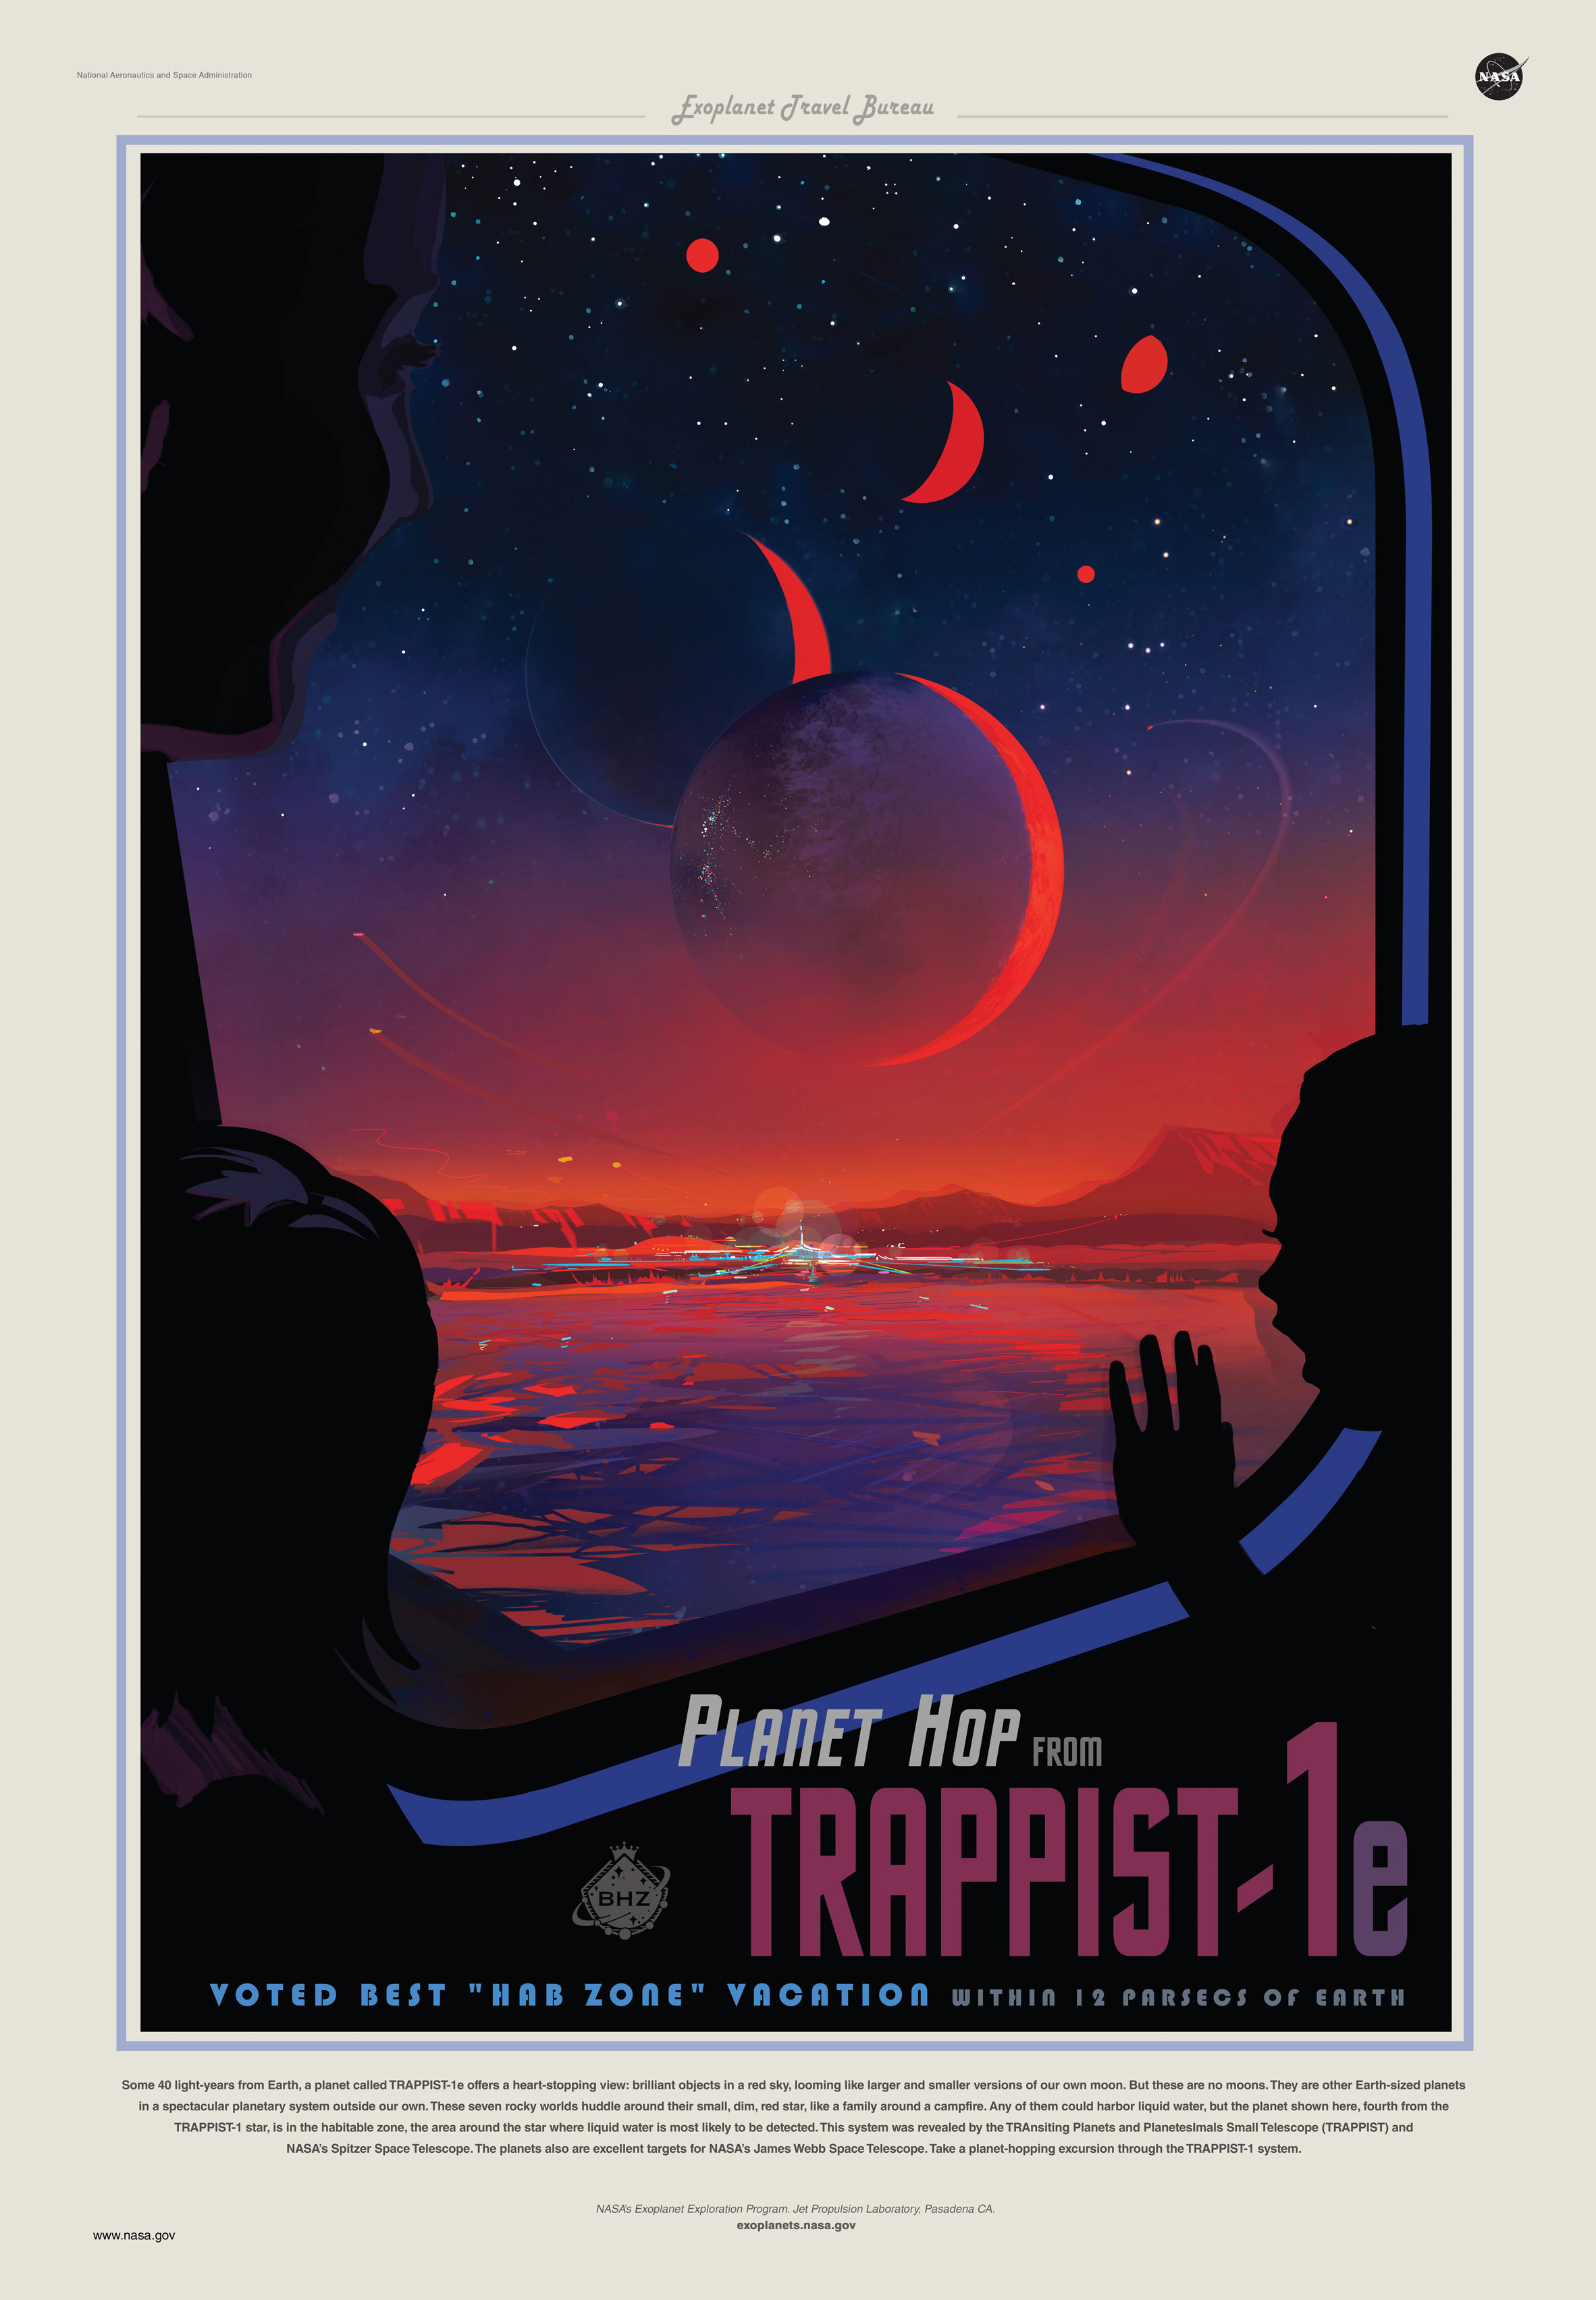 NASA TRAPPSIT-1e vintage travel poster